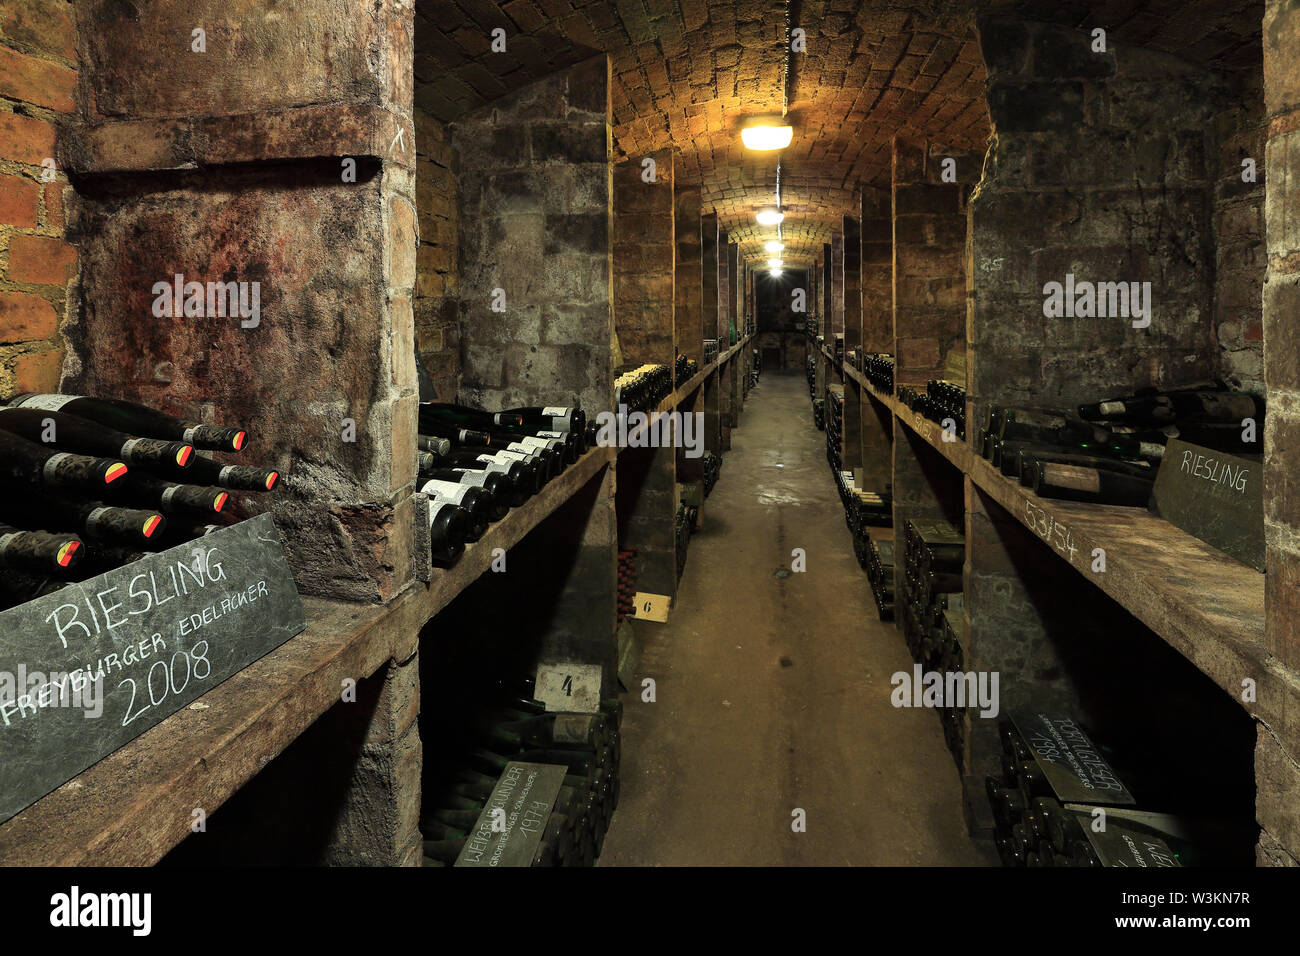 Kloster Pforta Wine Cellar, Reisling 2010 Stock Photo